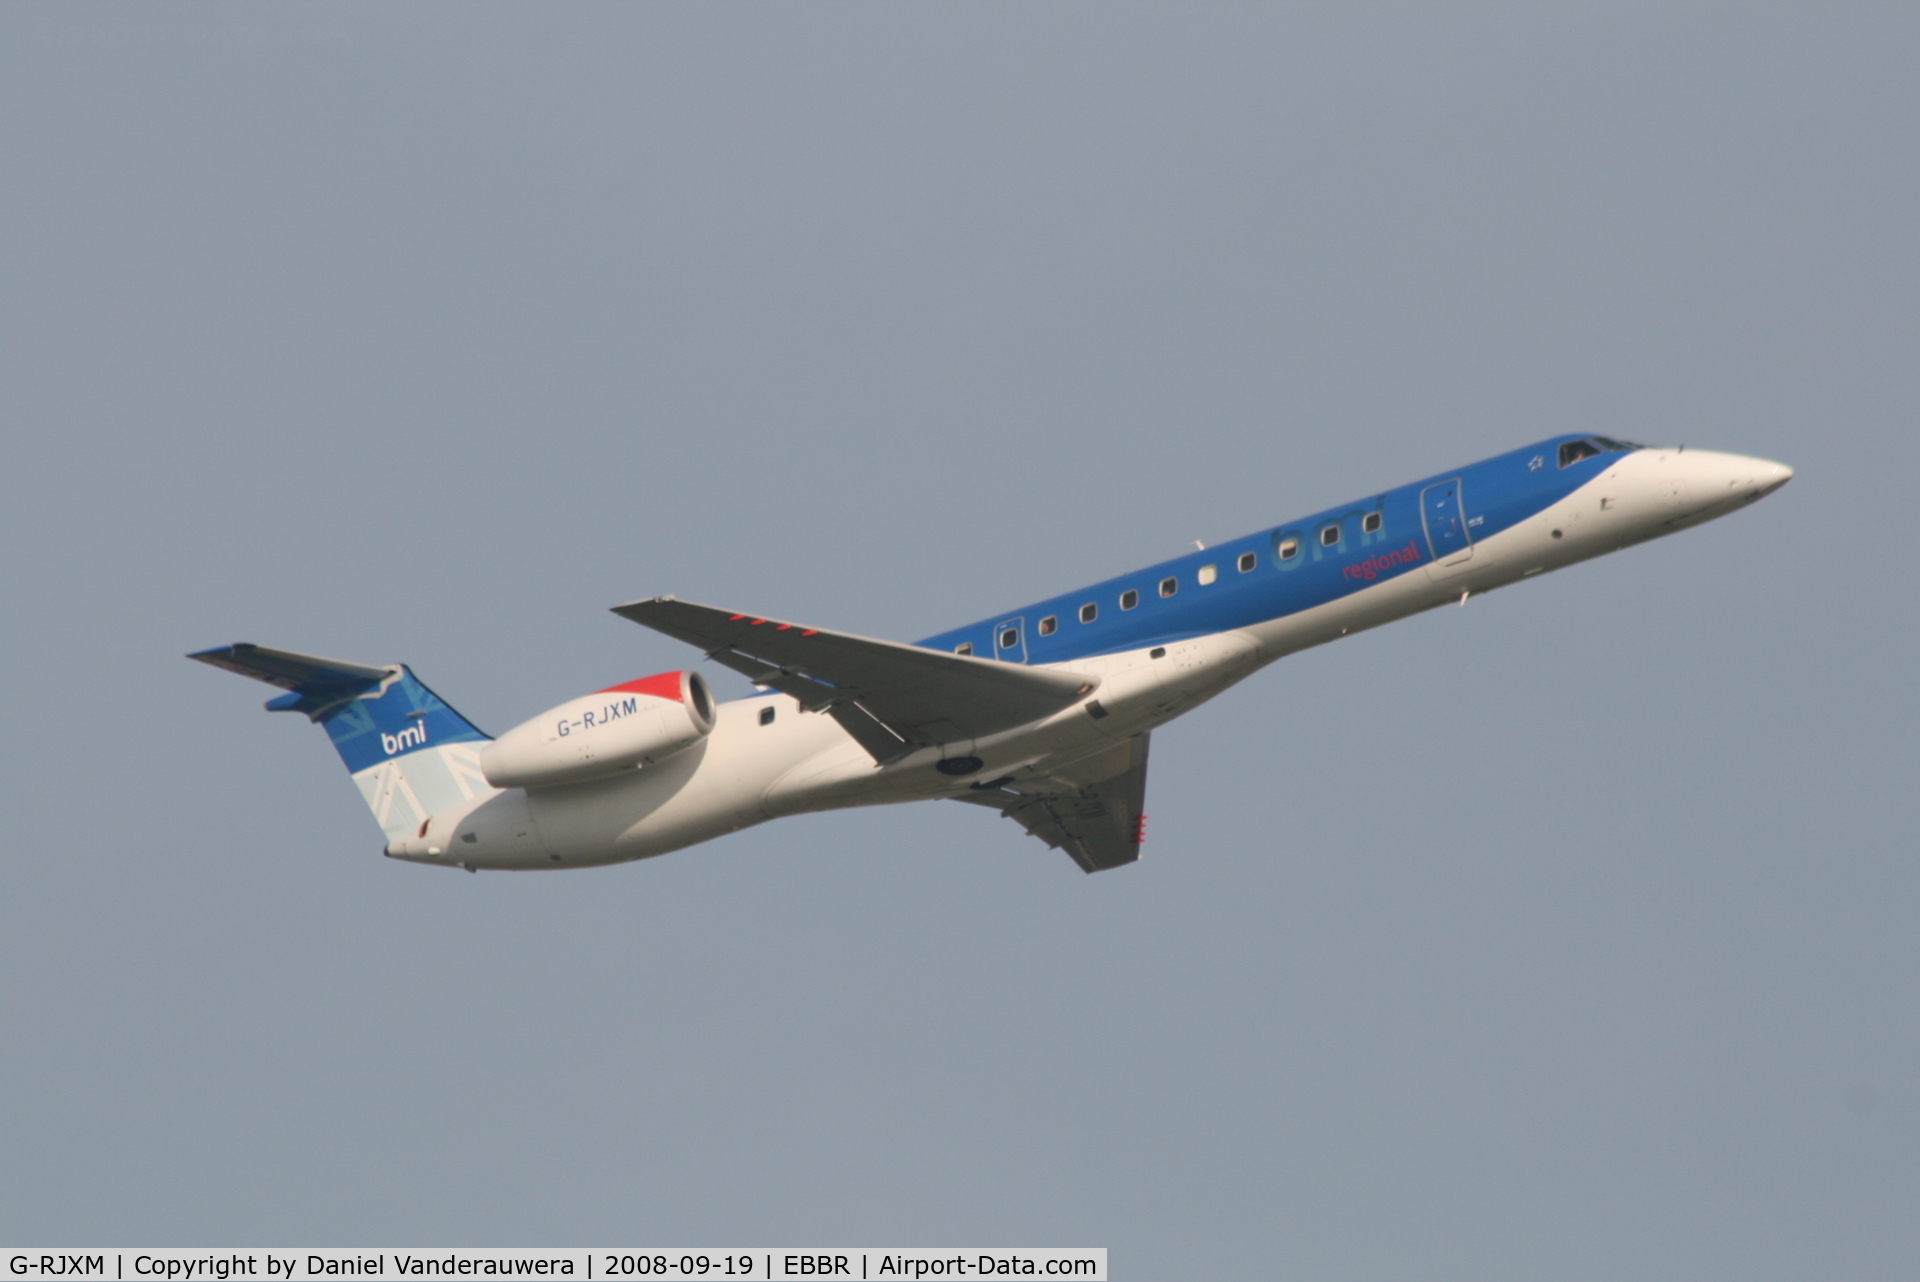 G-RJXM, 2000 Embraer ERJ-145MP (EMB-145MP) C/N 145216, Flight BD628 is taking off from RWY 07R